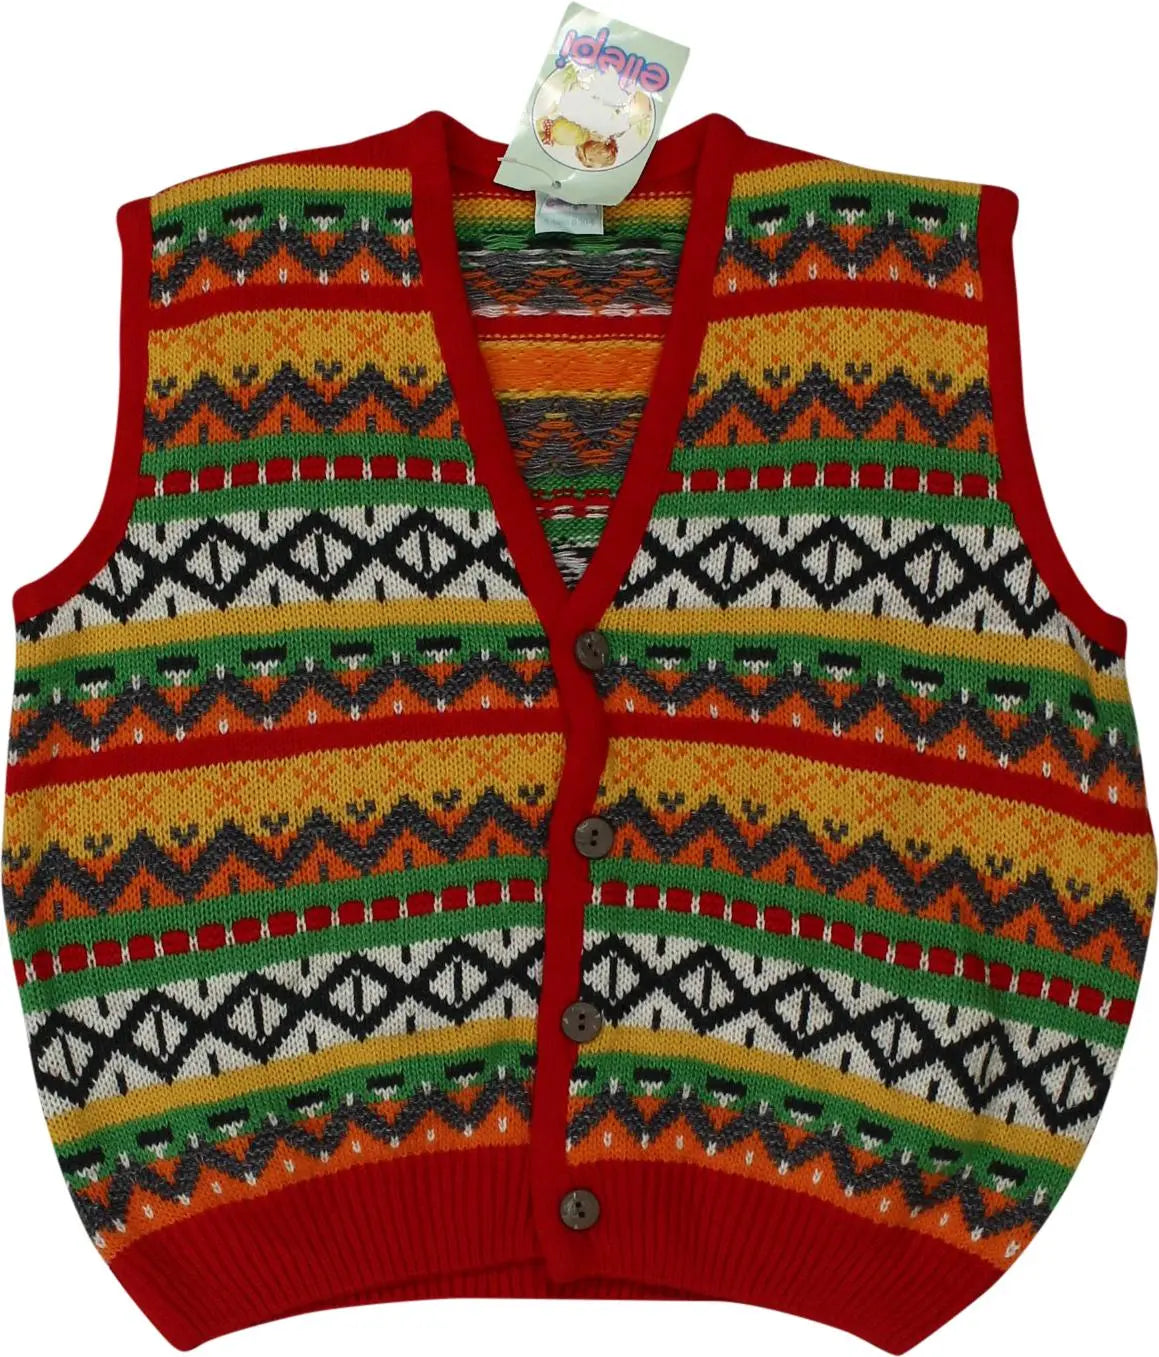 Ellepi - Colourful Knitted Vest- ThriftTale.com - Vintage and second handclothing